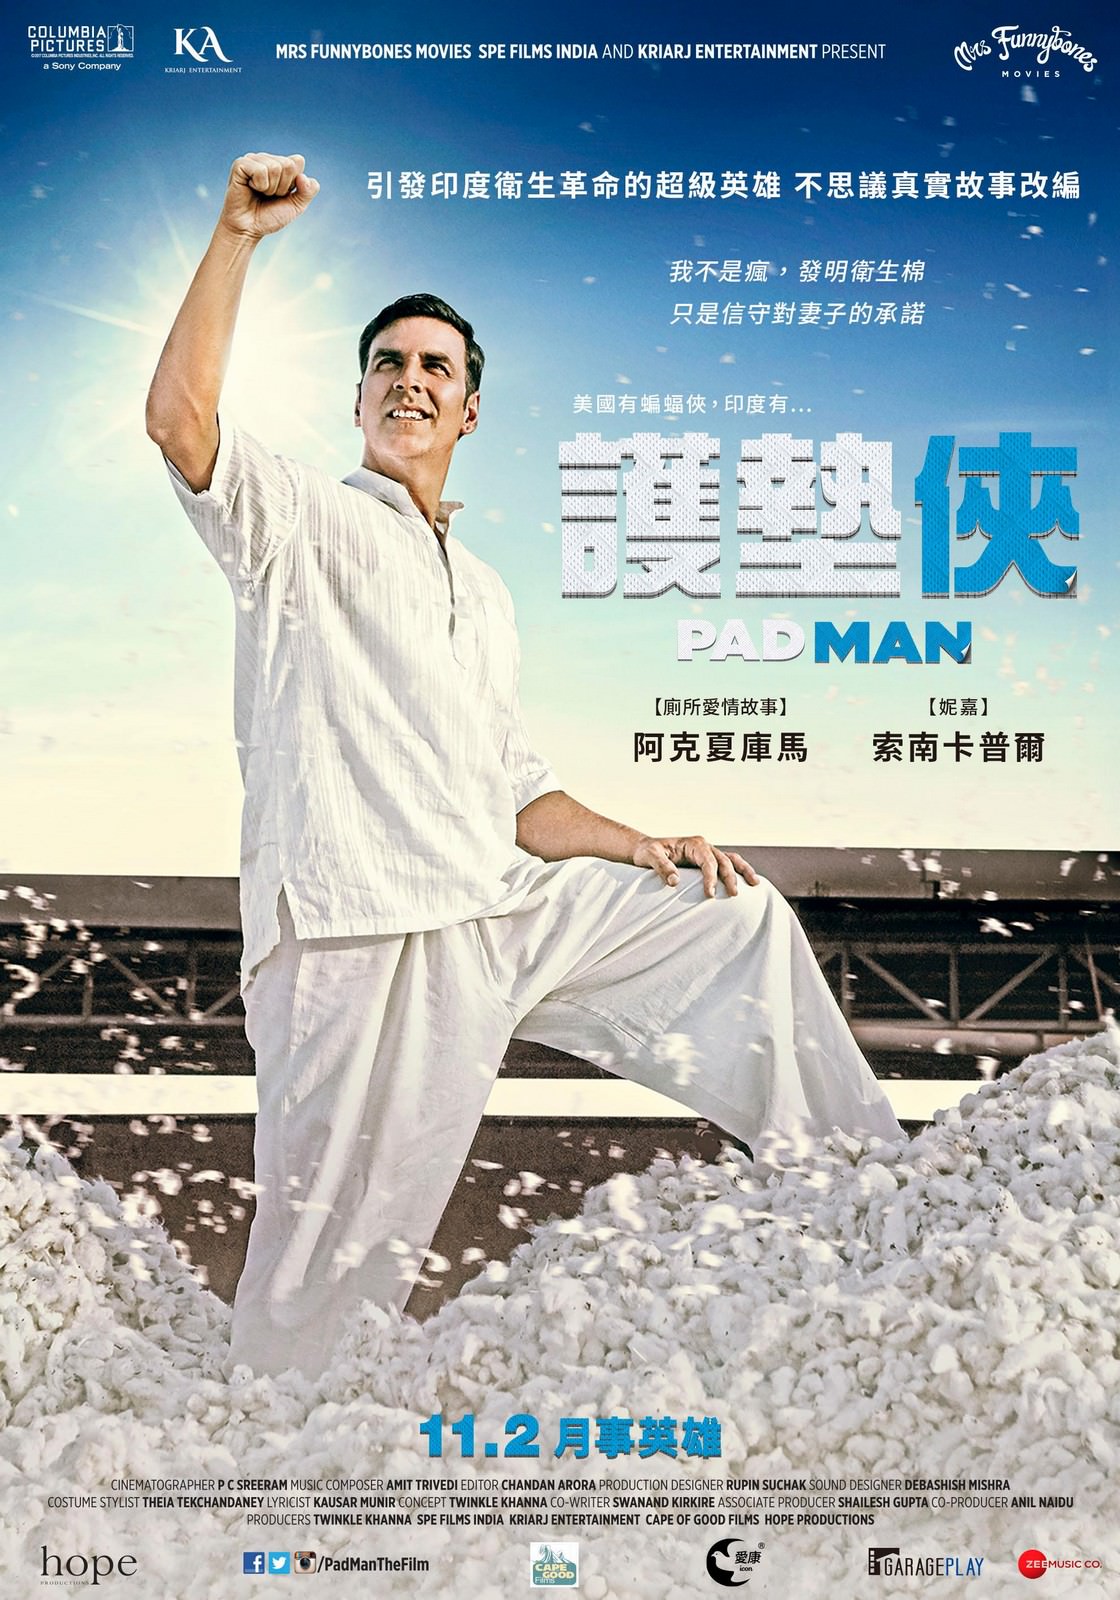 Movie, PadMan(印度, 2018年) / 護墊俠(台灣) / 印度合伙人(中國), 電影海報, 台灣